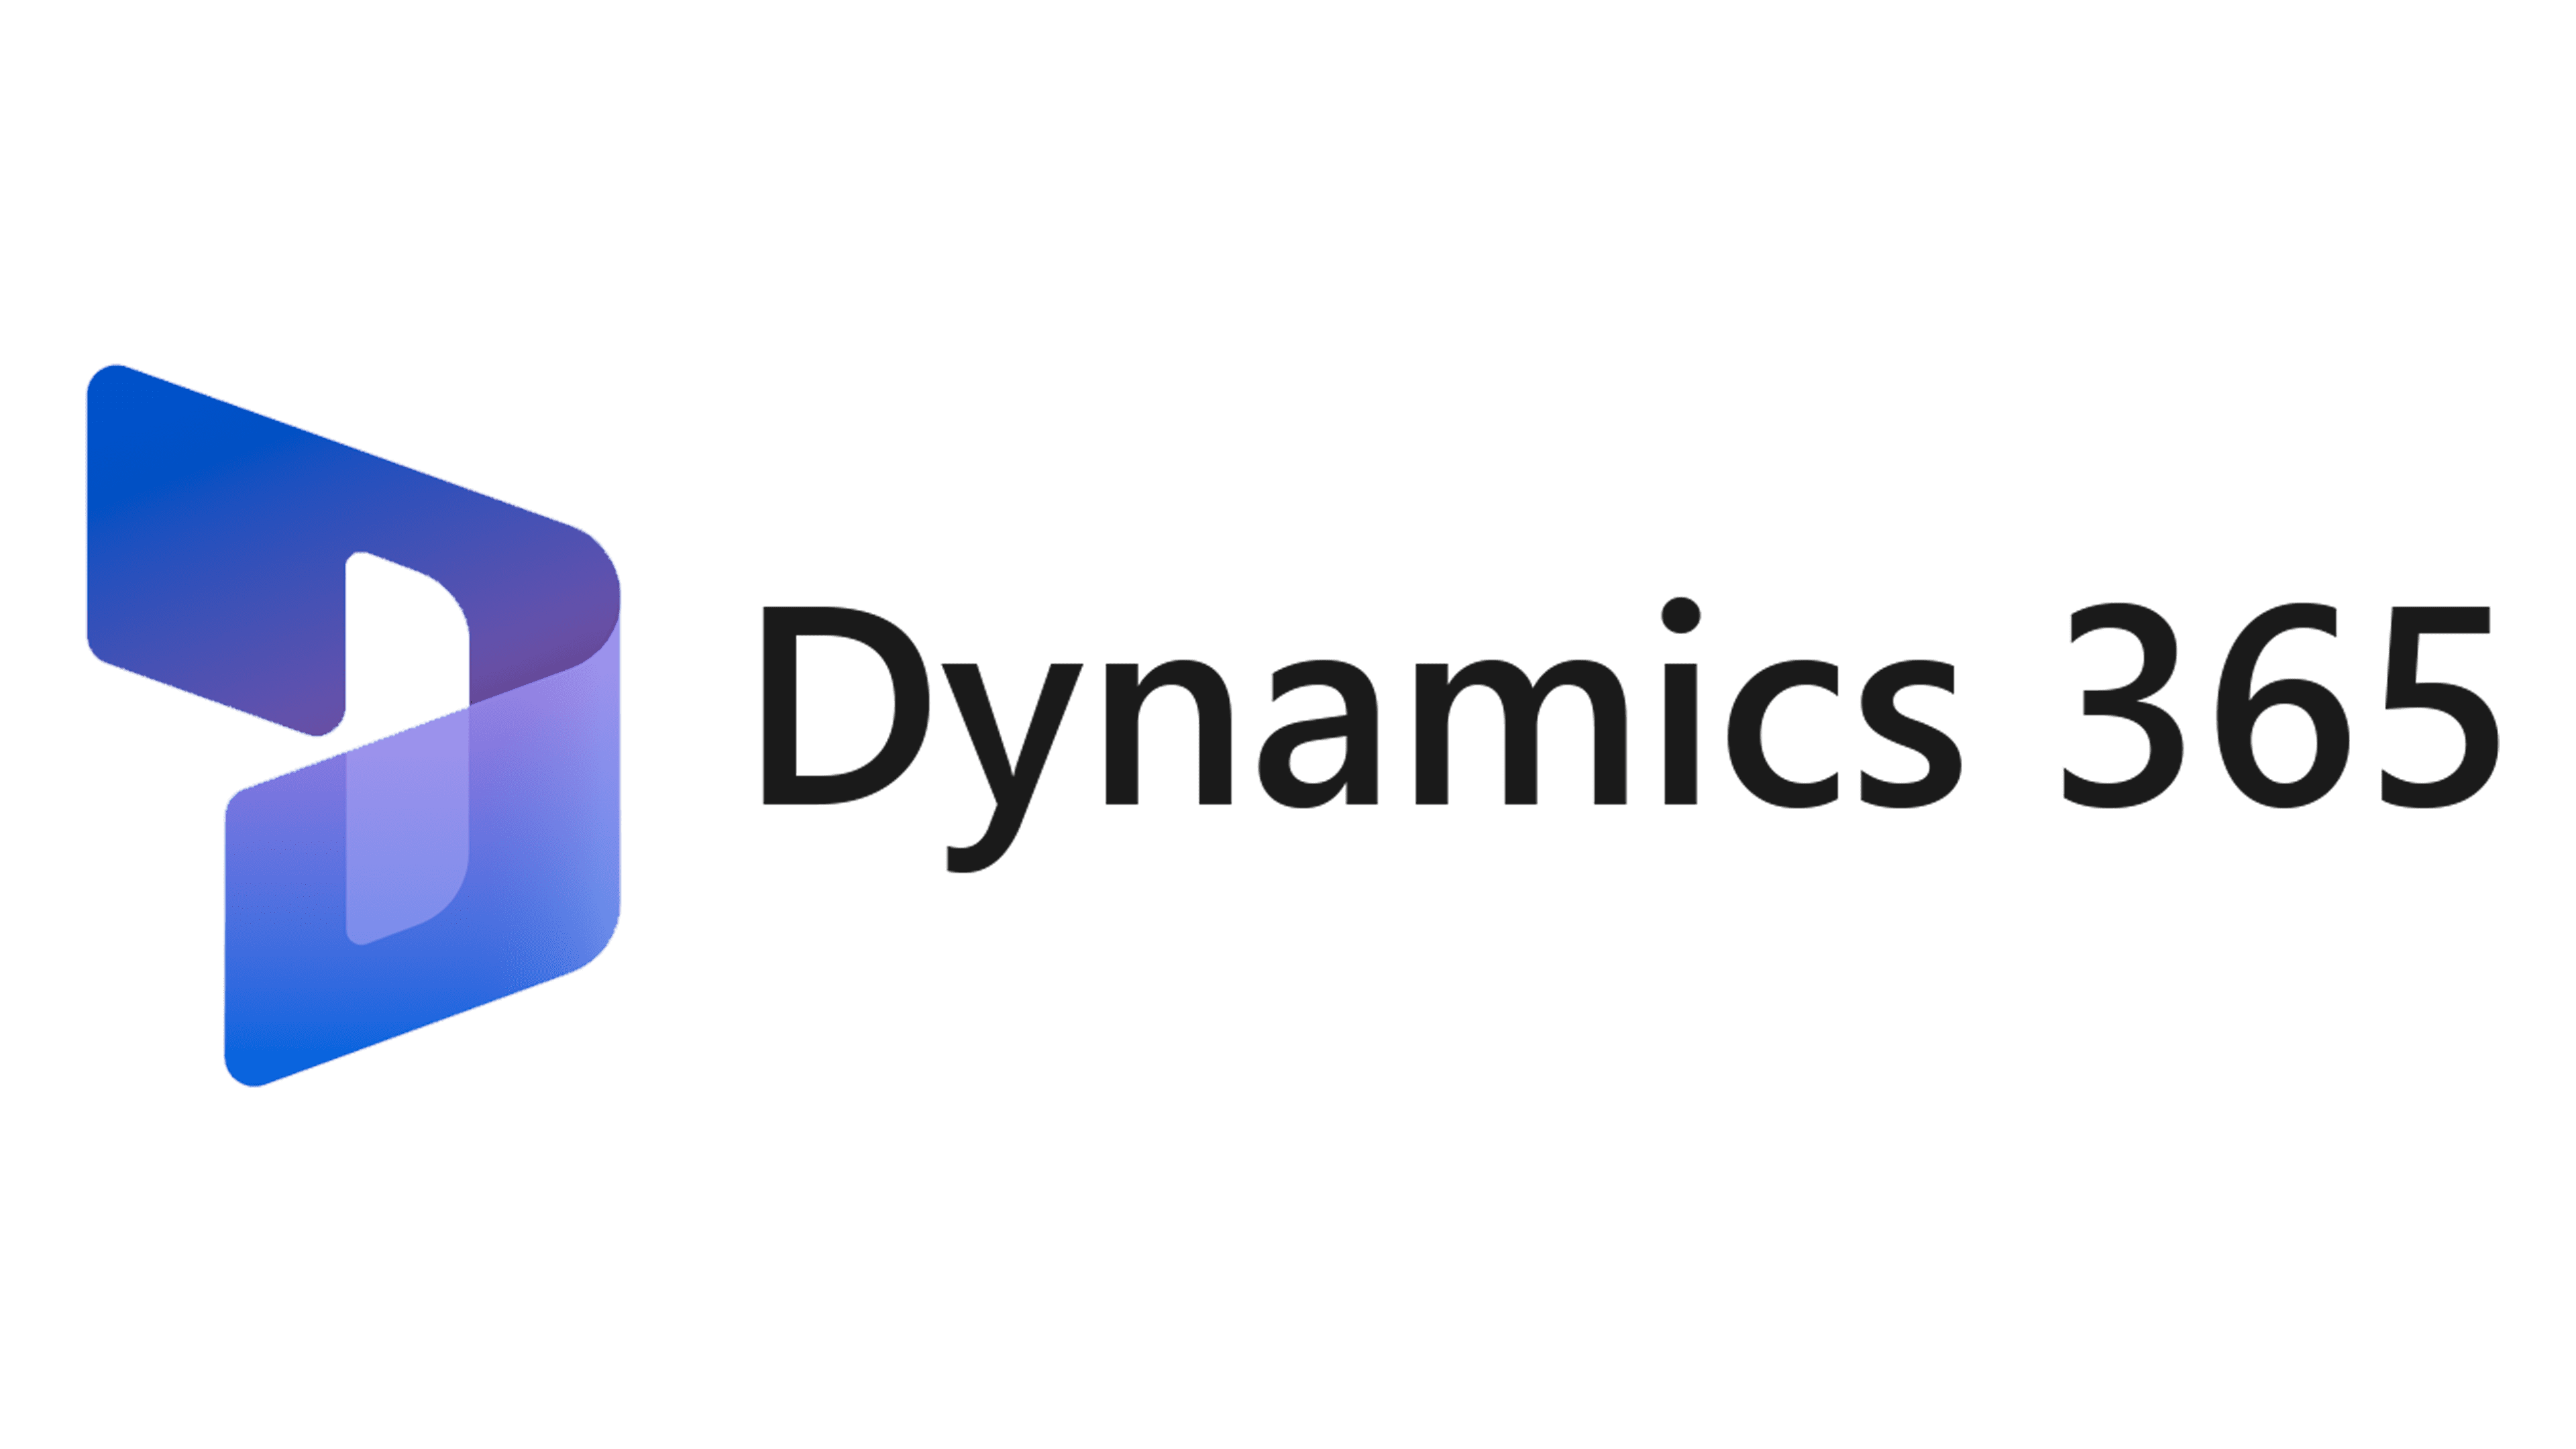 MS Dynamics 365 Logo